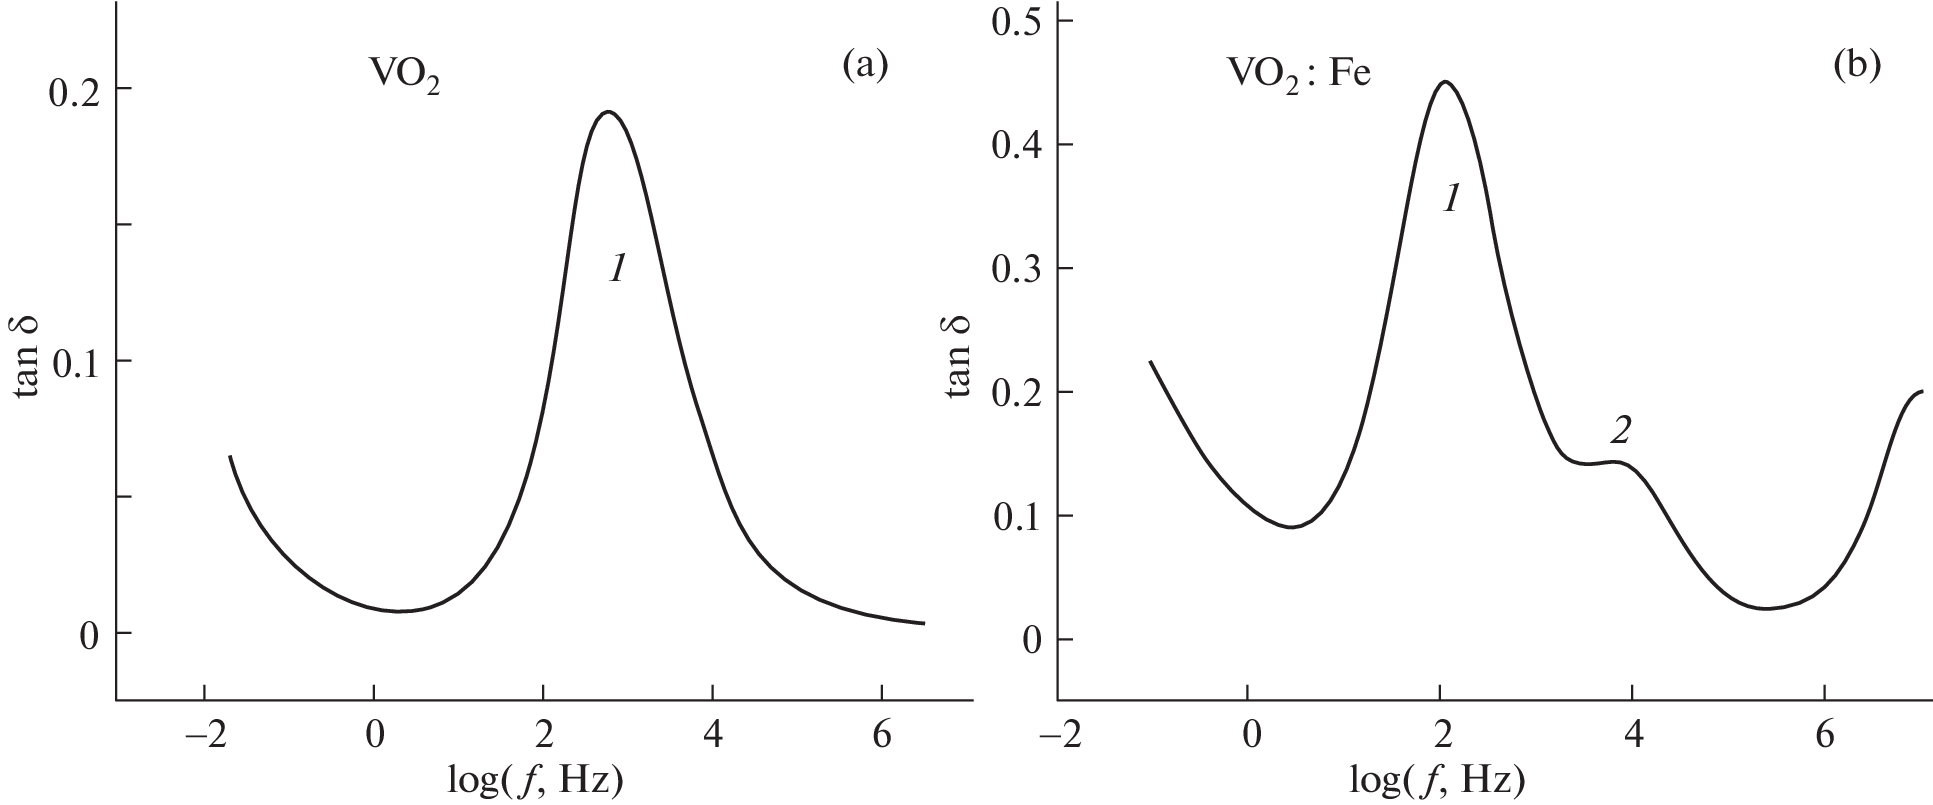 Dielectric Measurements of Nanocrystalline VO2:Fe Films